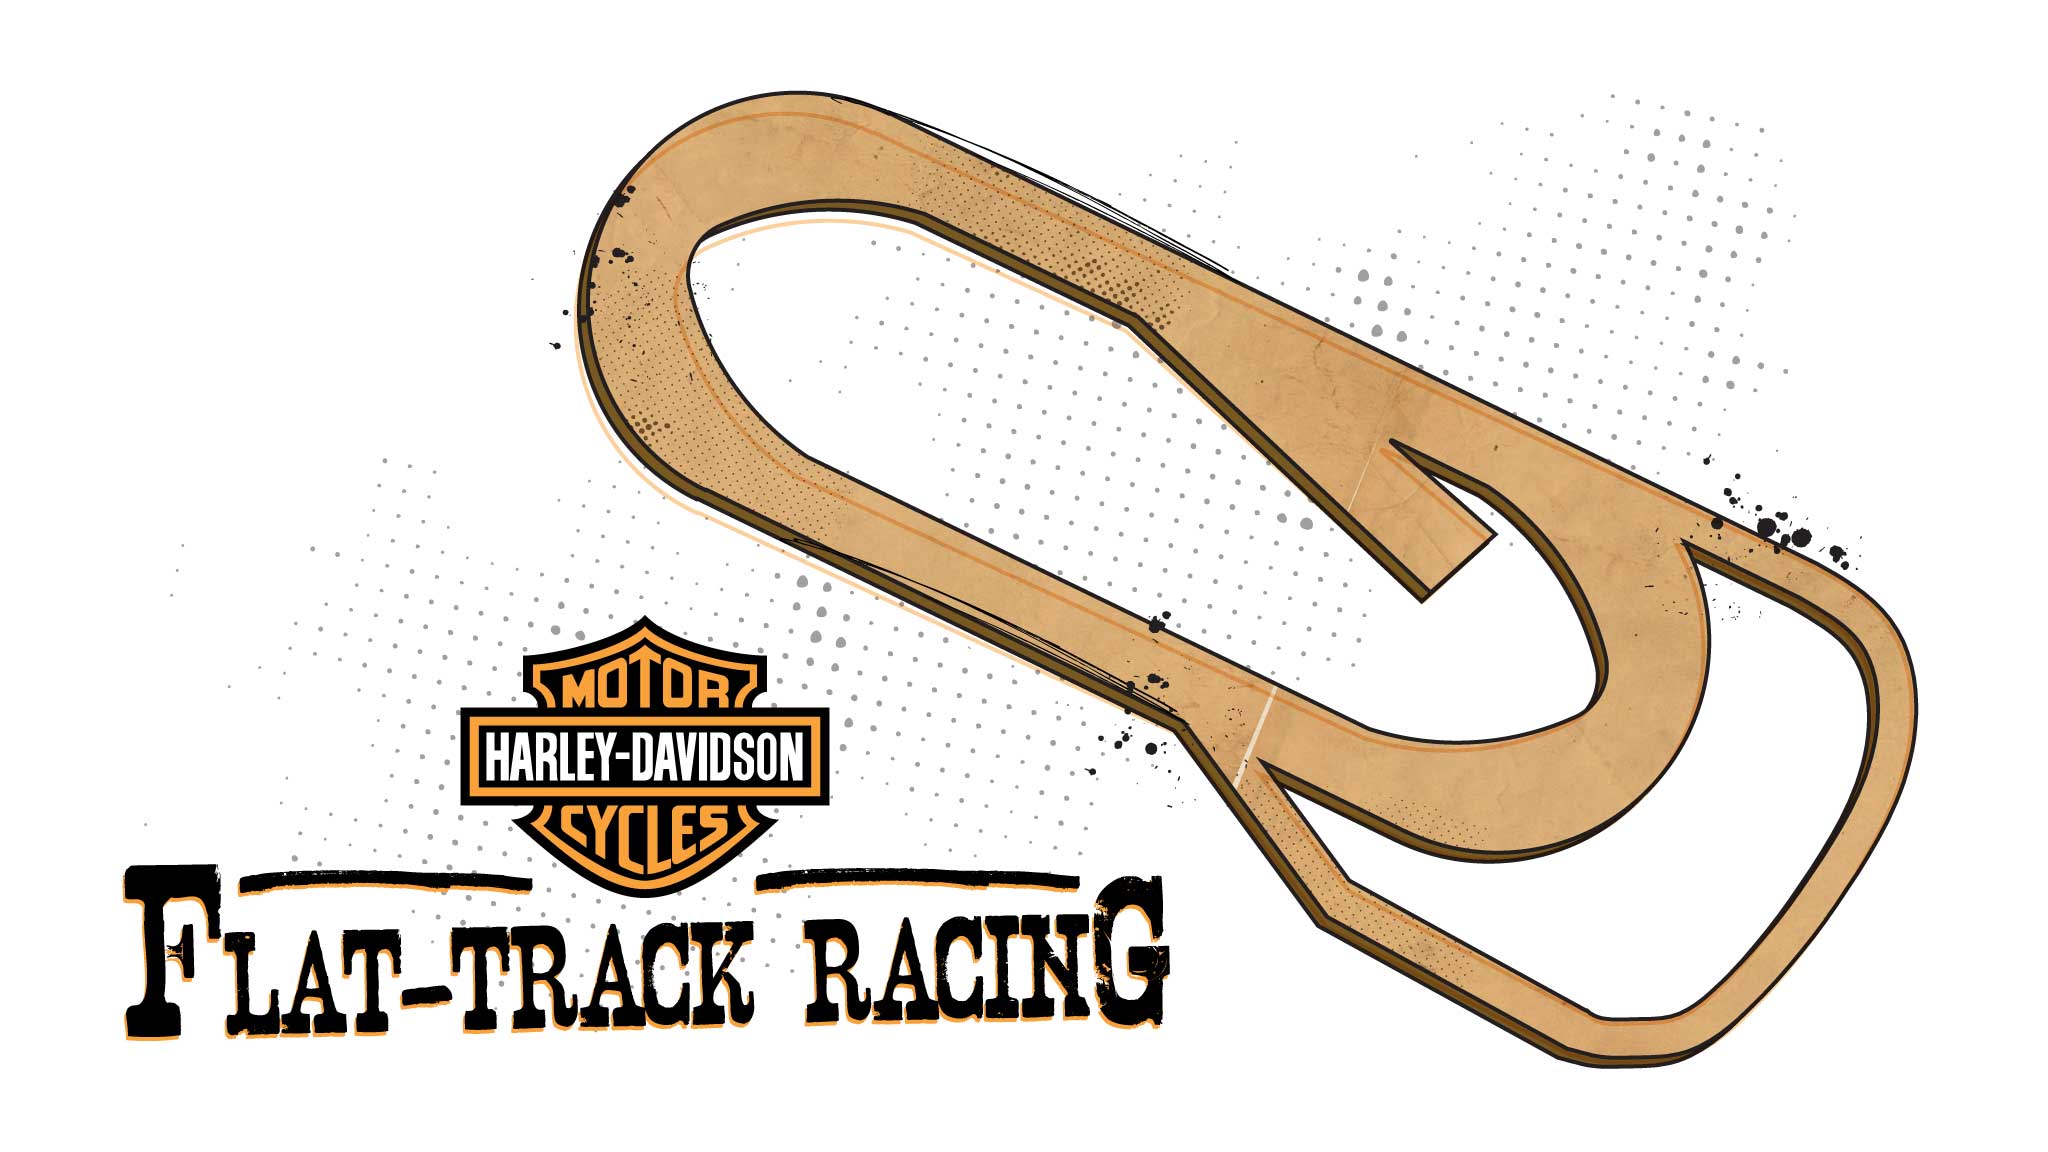 Flat-Track Racing